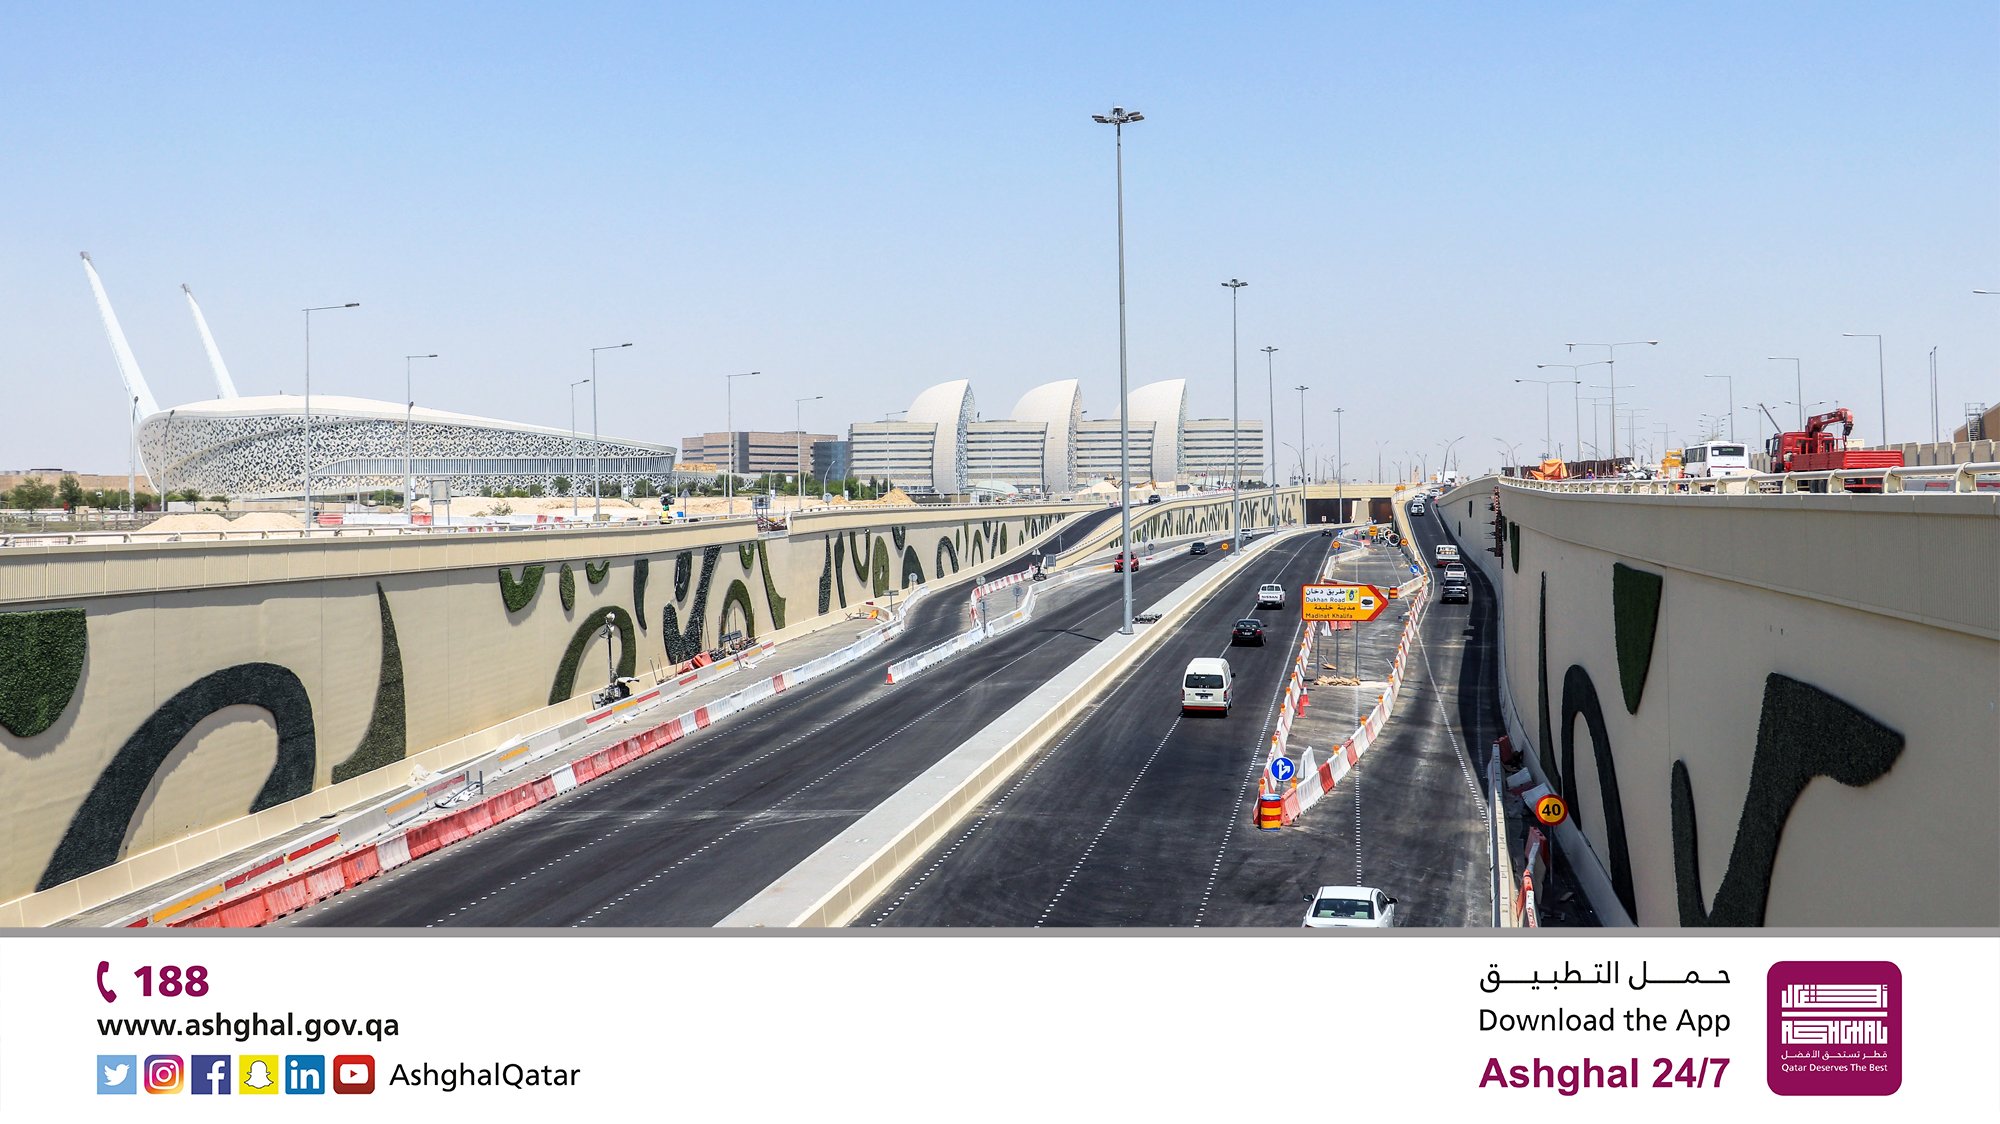 Ashghal opened a tunnel from Al Rayyan towards Al Gharrafa